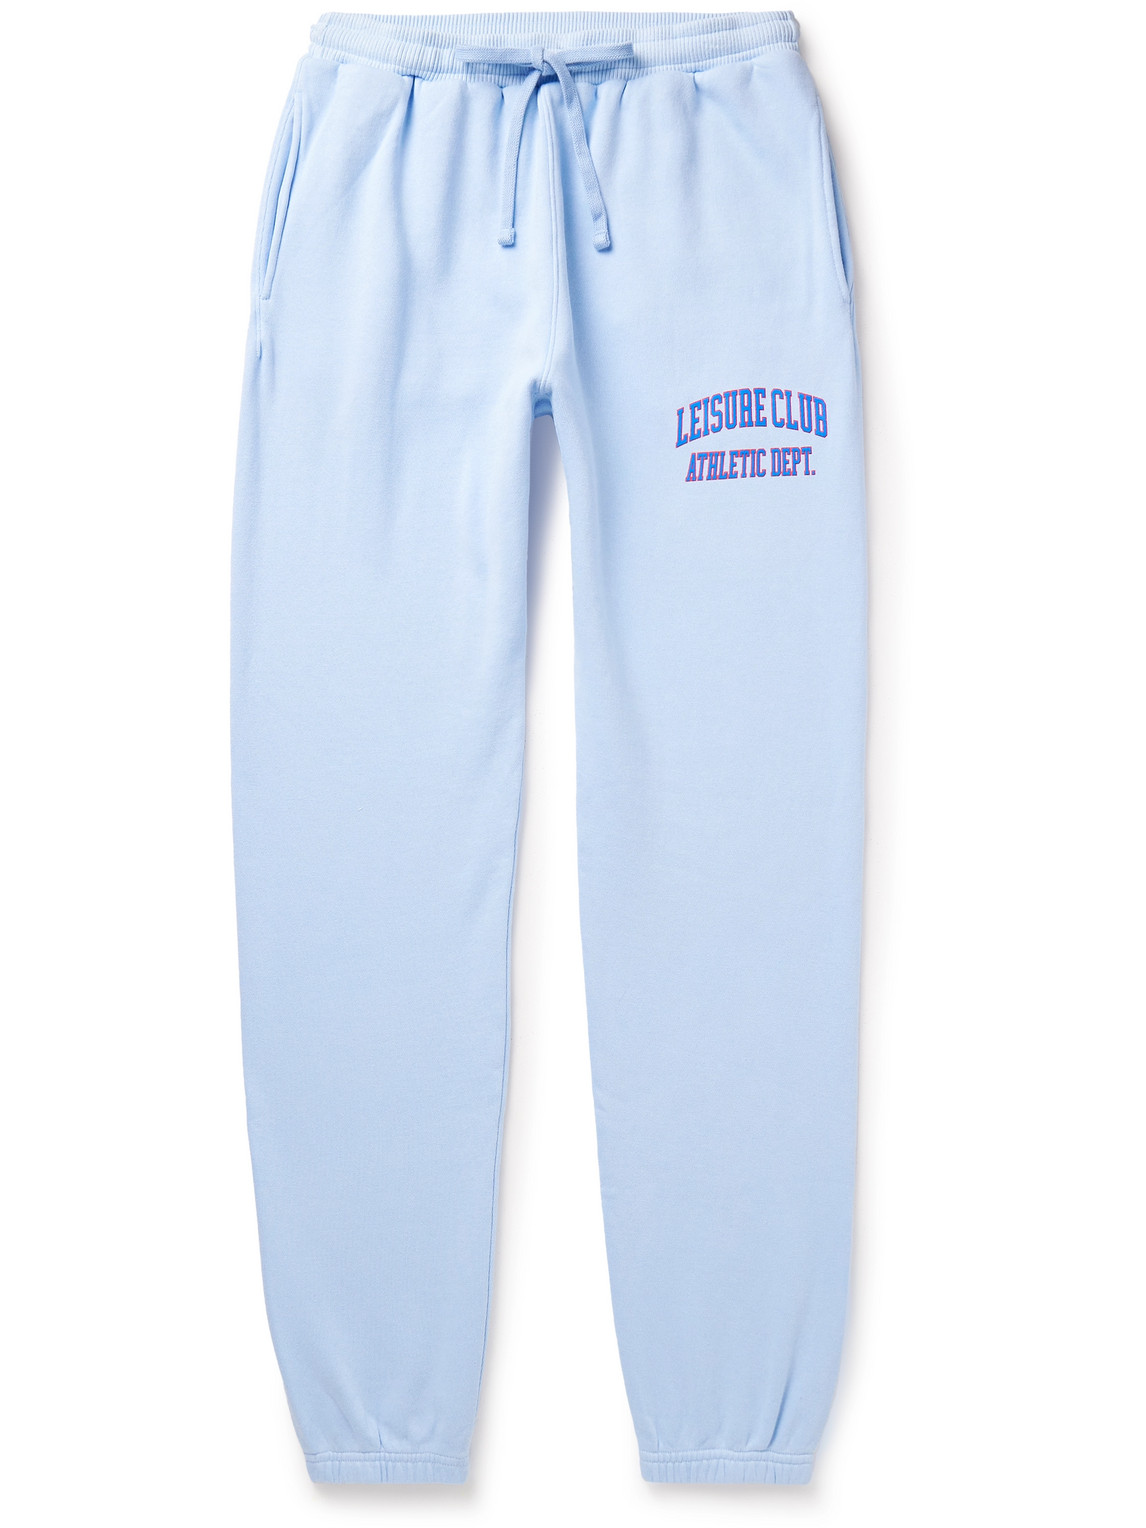 Pasadena Leisure Club - Athletic Dept. Tapered Logo-Print Garment-Dyed Cotton-Jersey Sweatpants - Men - Blue - L von Pasadena Leisure Club